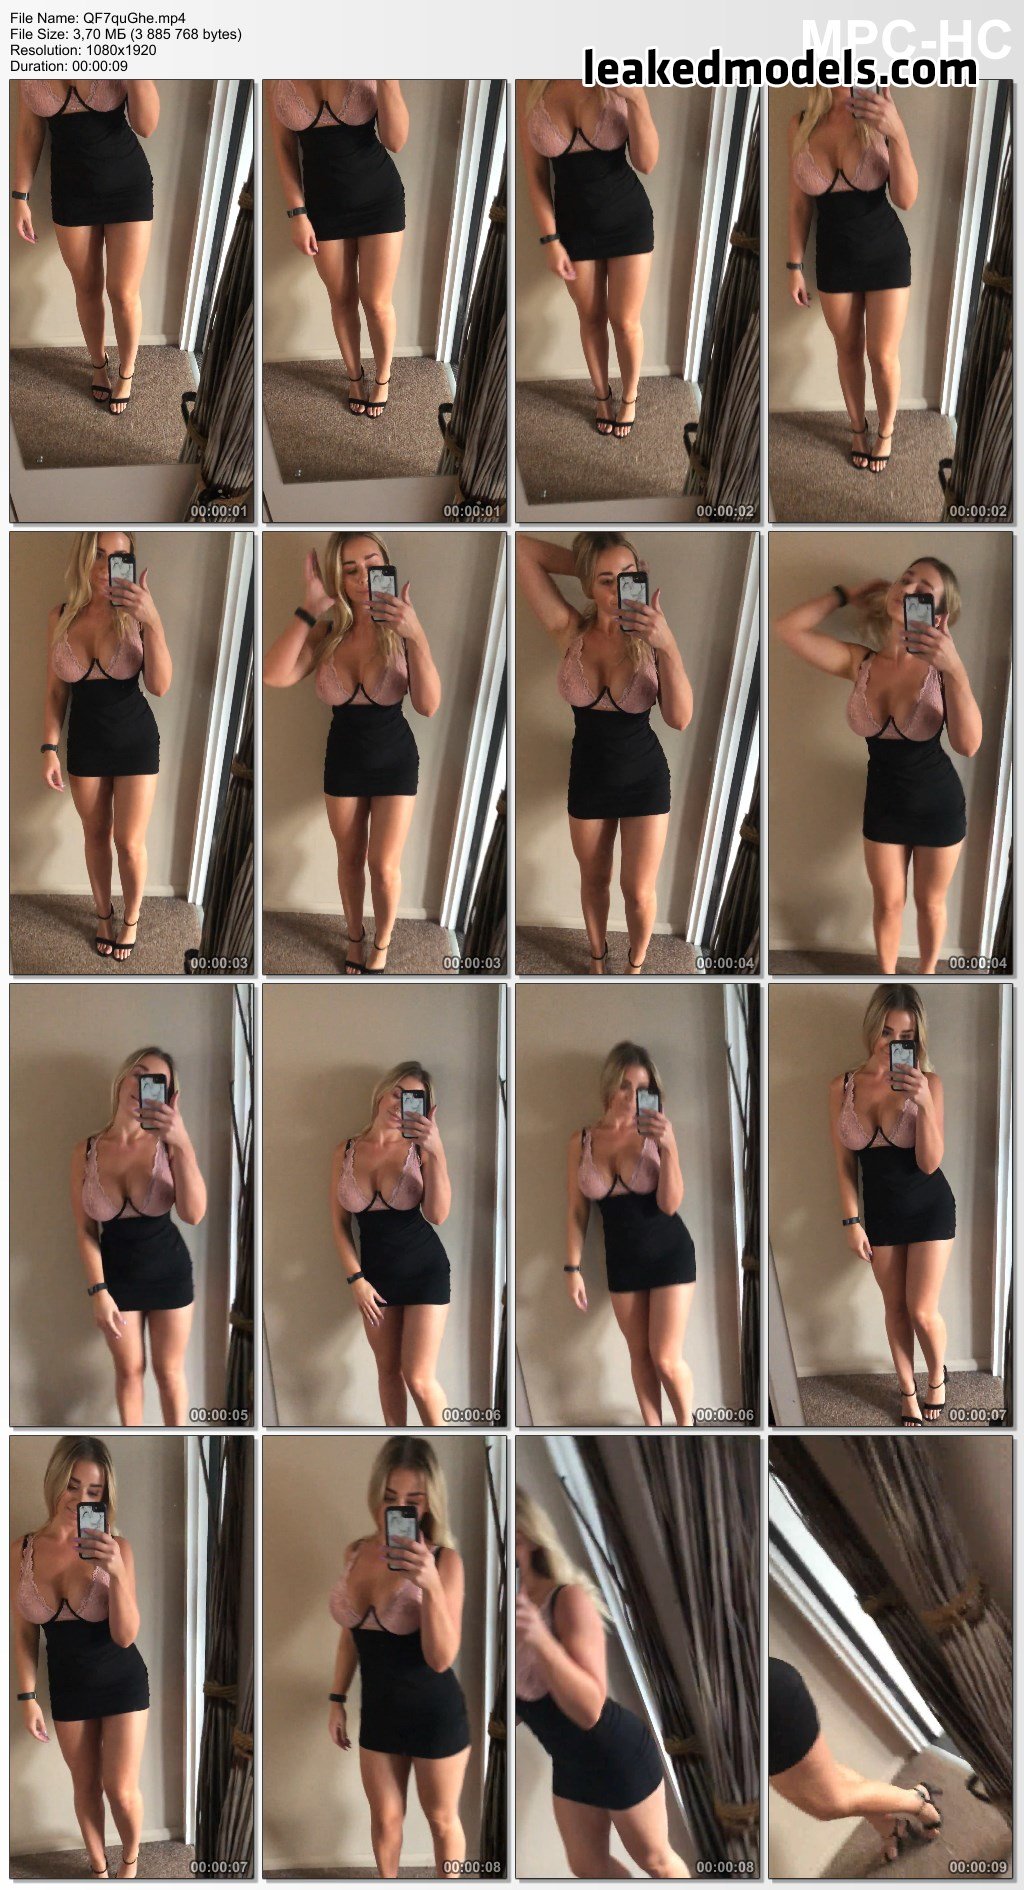 melissa debling leaked nude leakedmodels.com 0016 - Melissa Debling Instagram Nude Leaks (27 Photos)